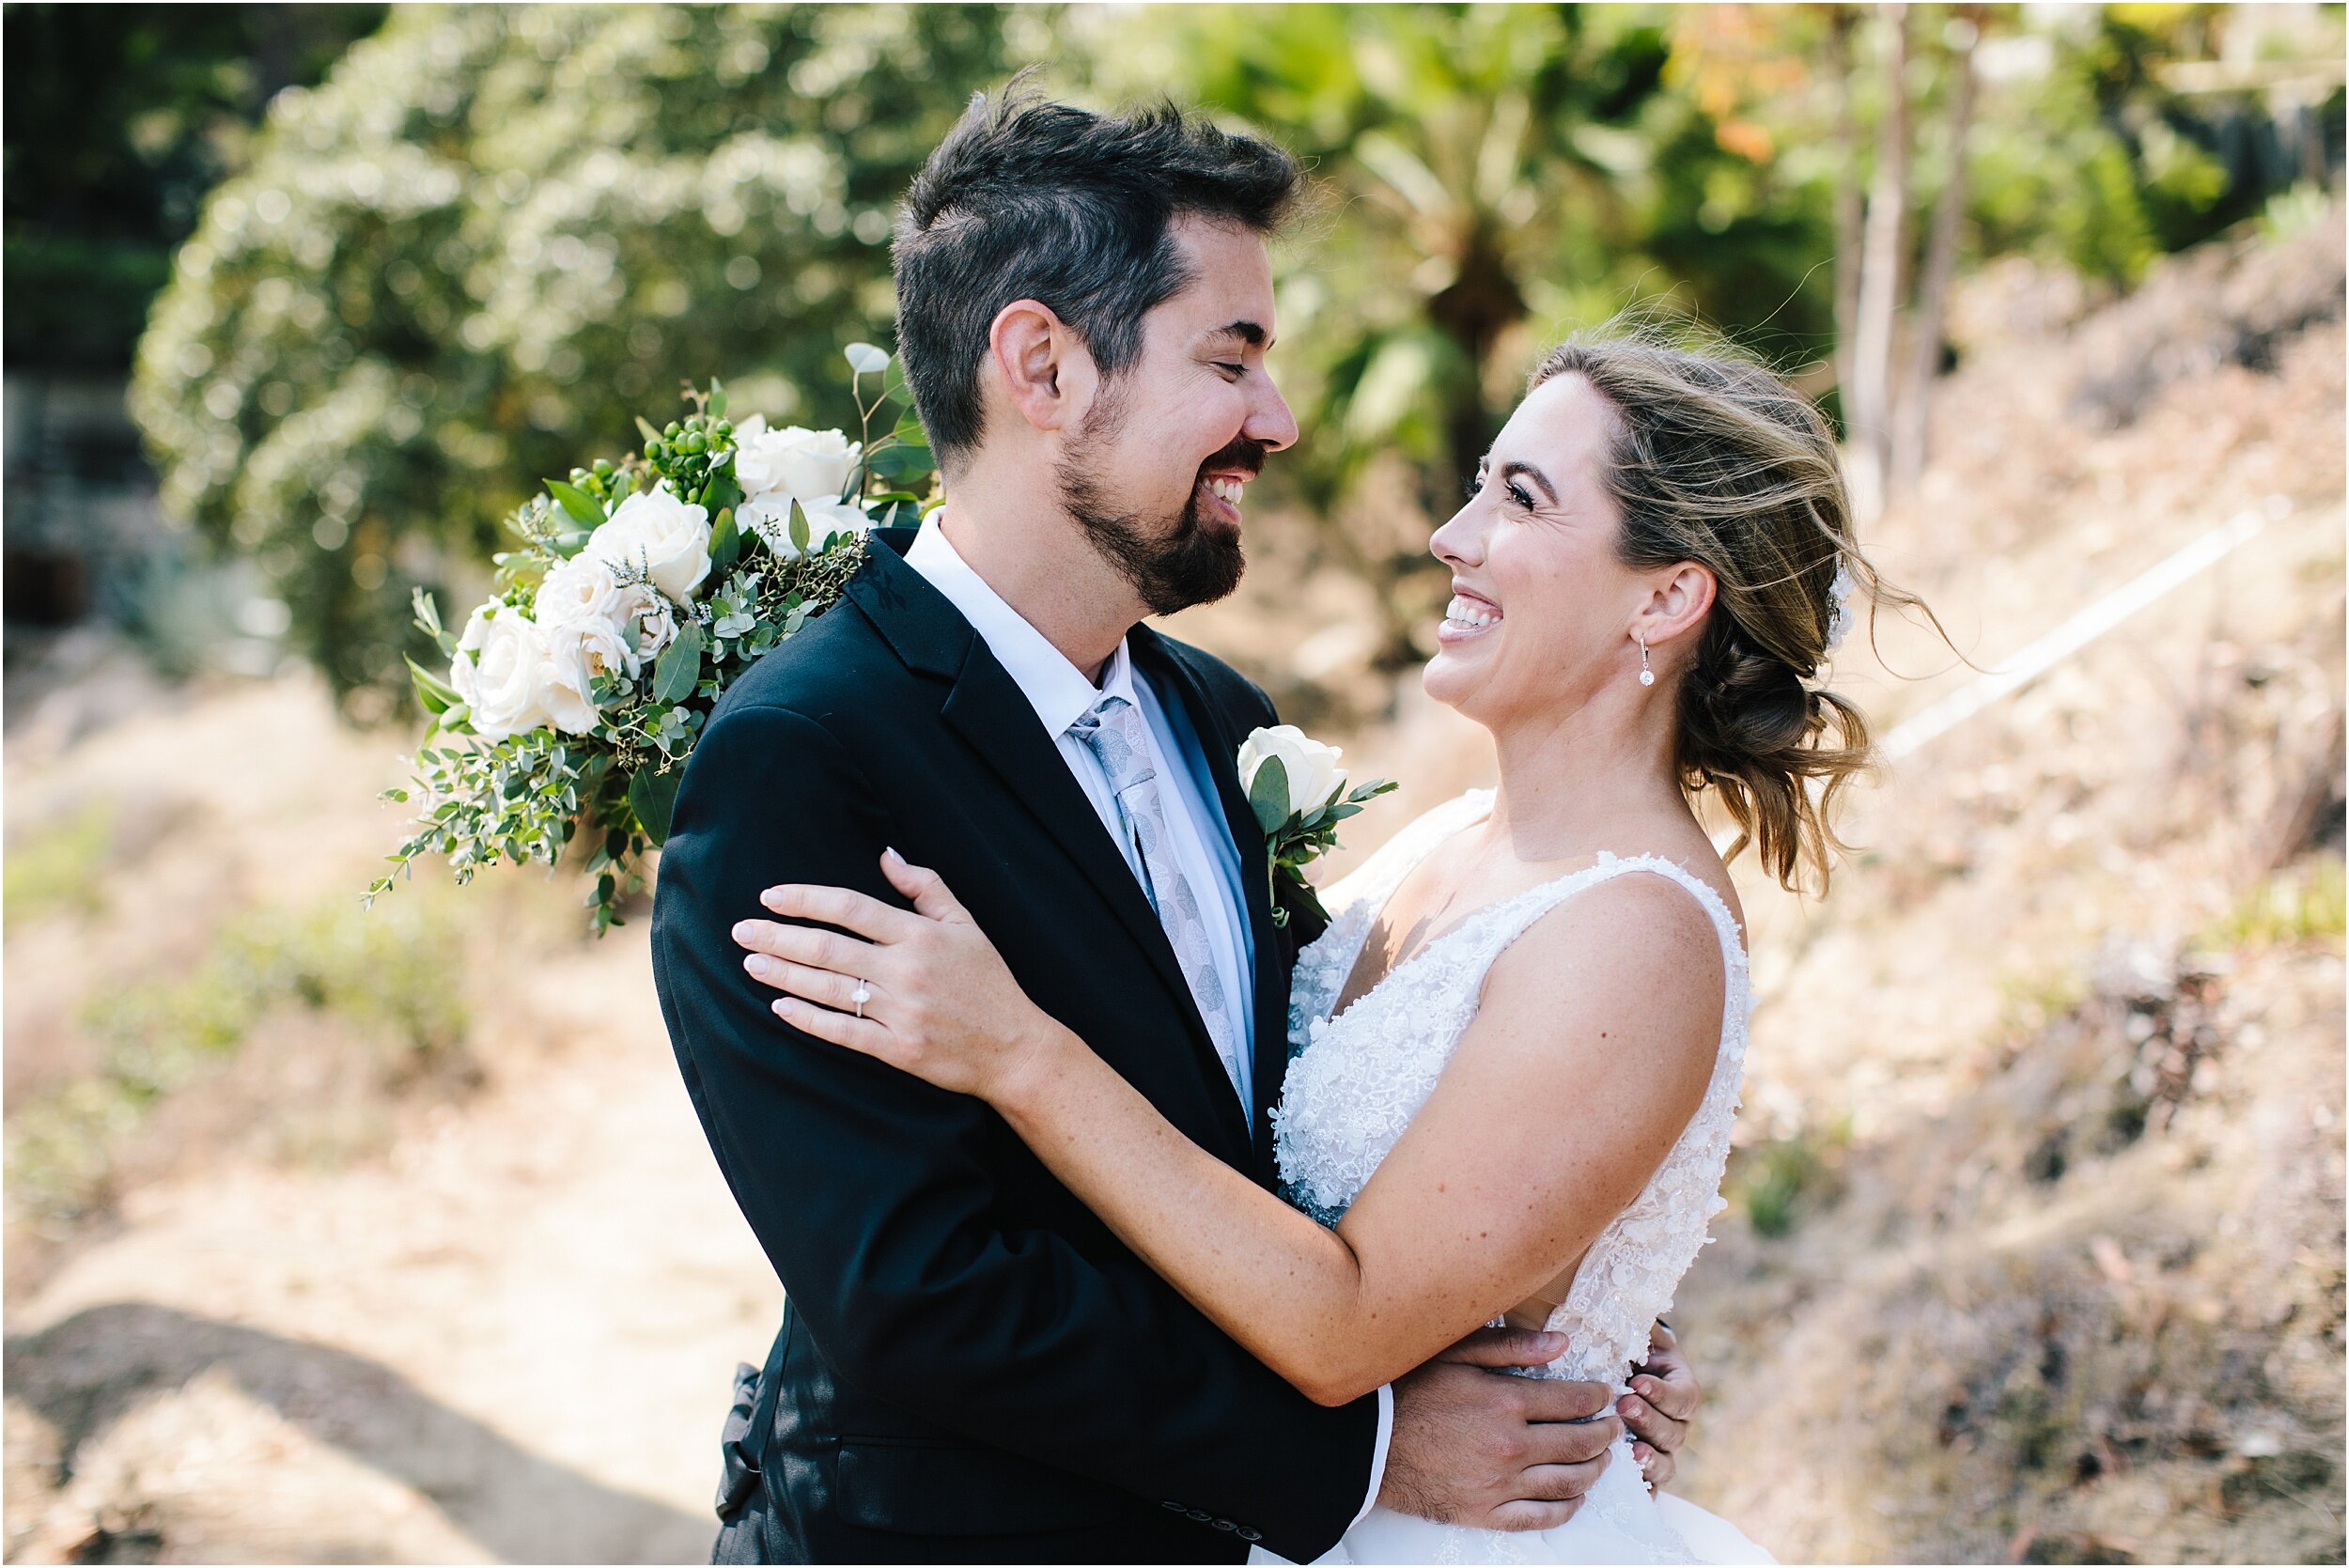 Caitlin and jason | Small Malibu Wedding | Malibu Elopement Photographer_0010.jpg